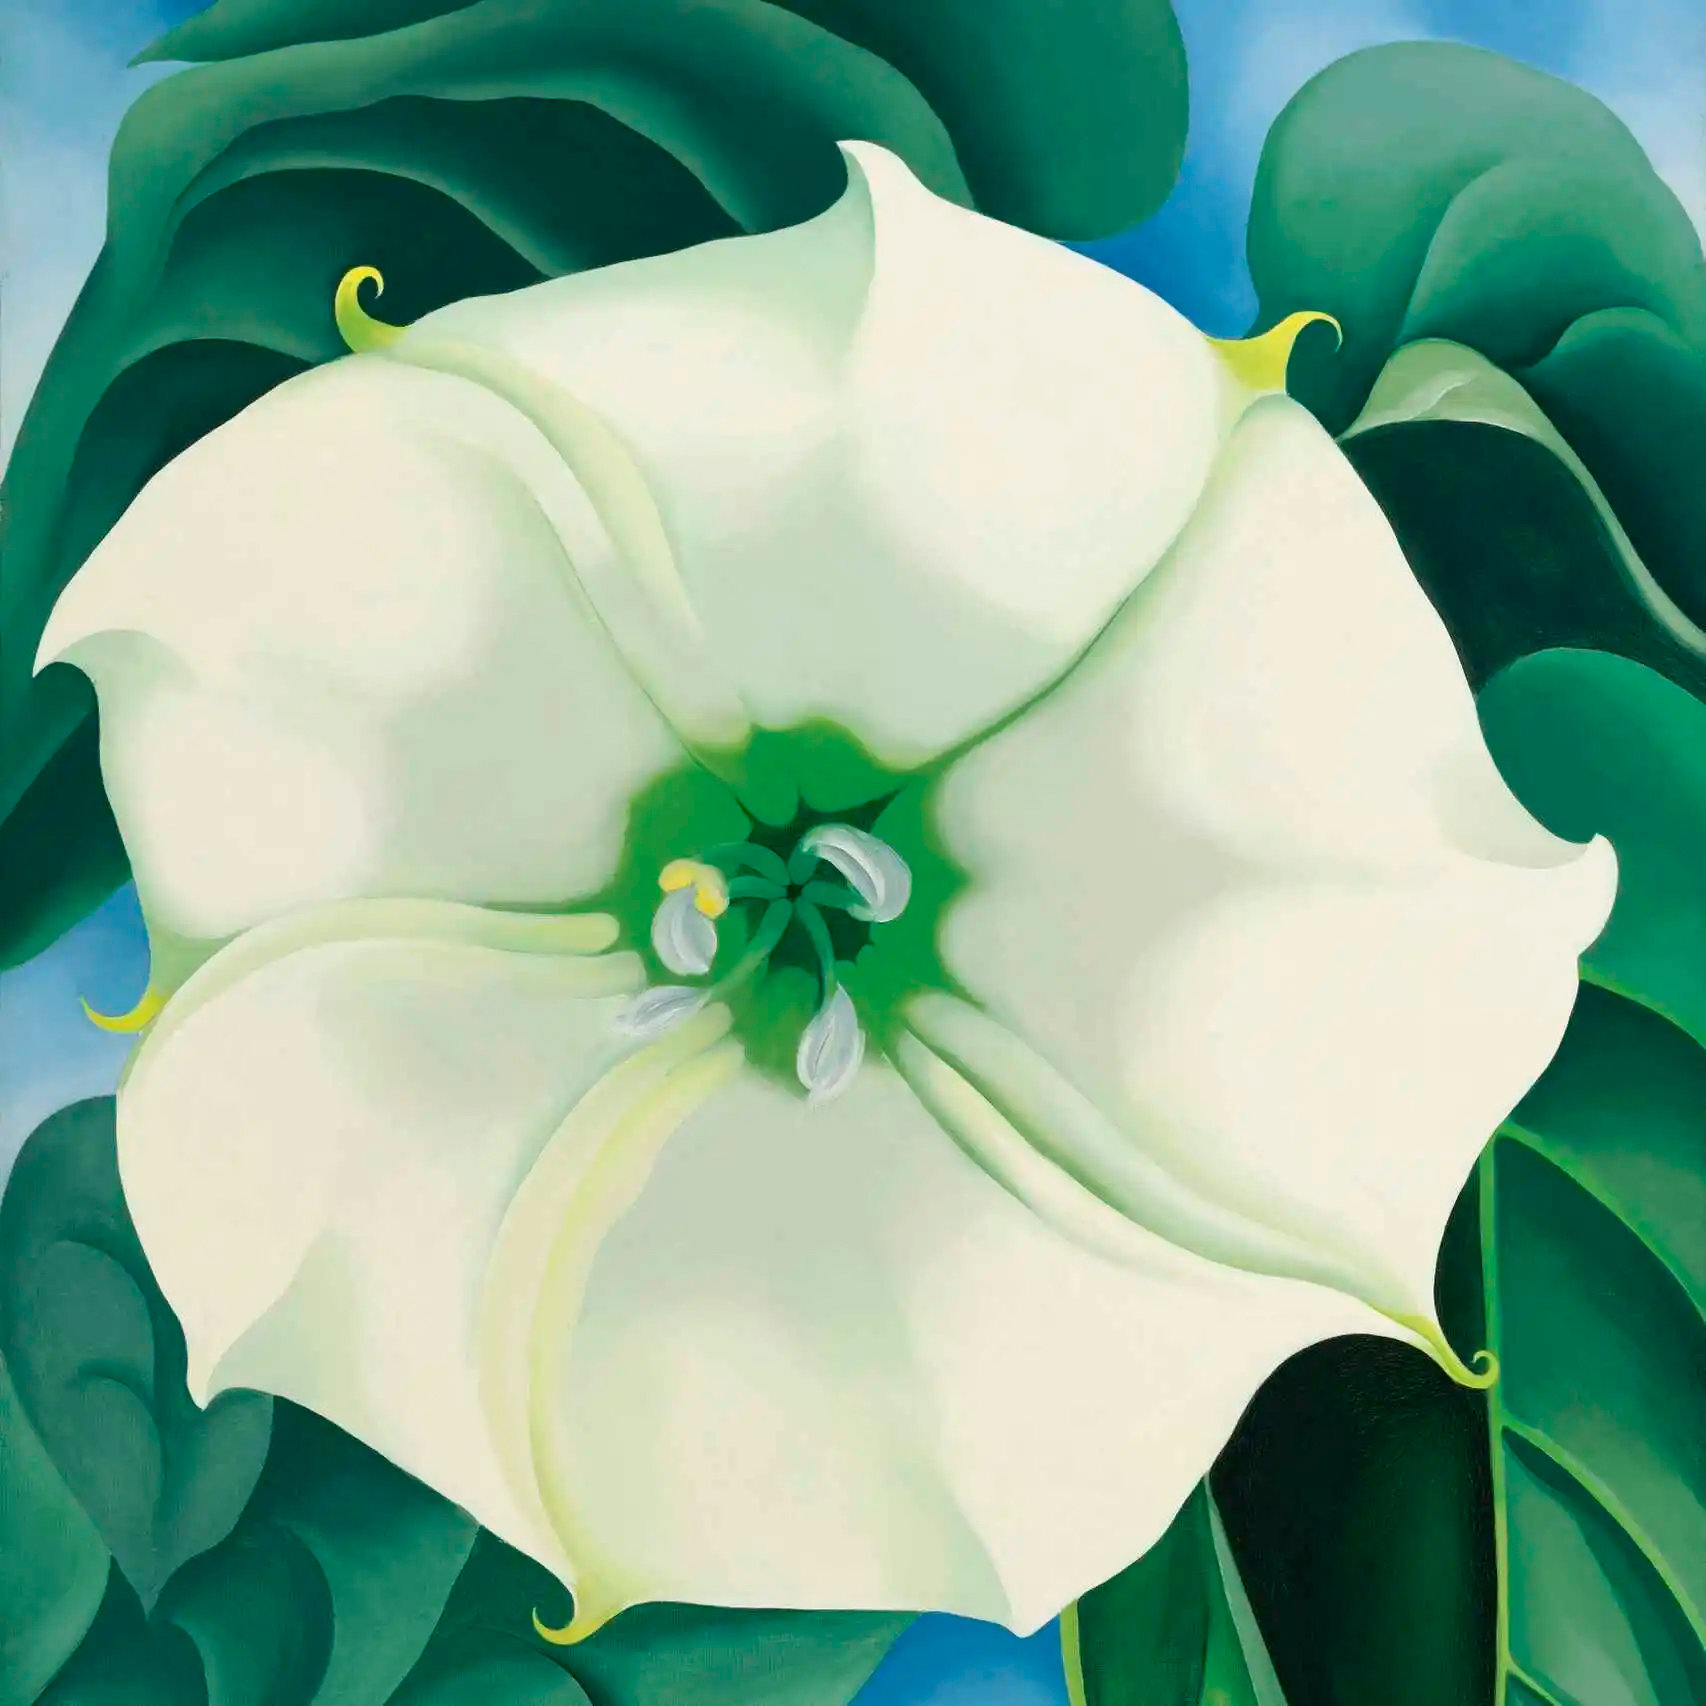 Flor Blanca nº1, Georgia O'Keeffe, 1932